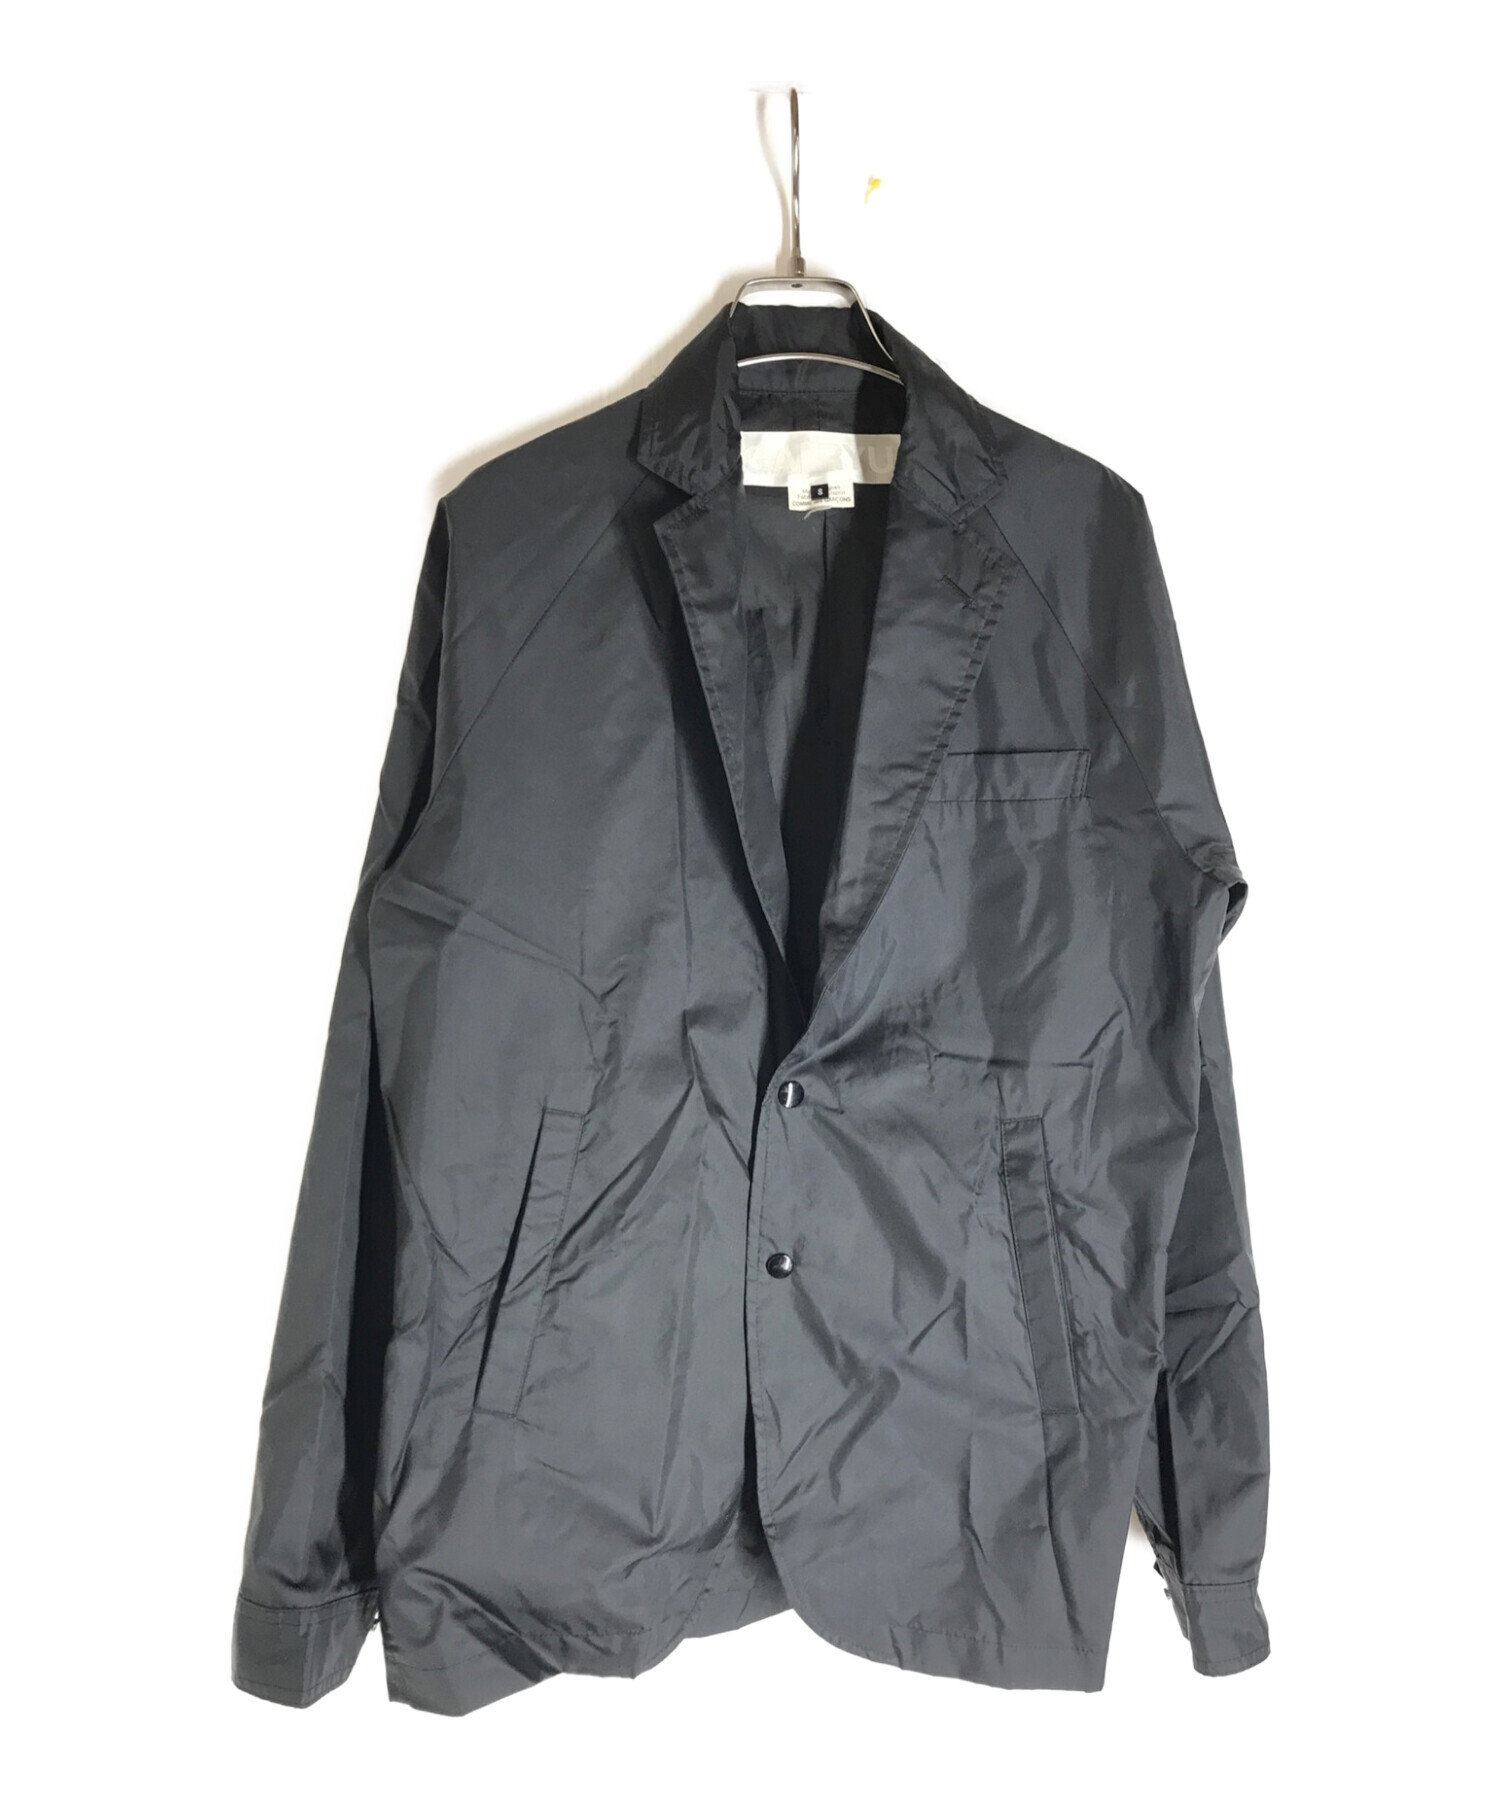 GANRYU (ガンリュウ) ナイロンテーラードジャケット ブラック サイズ:S